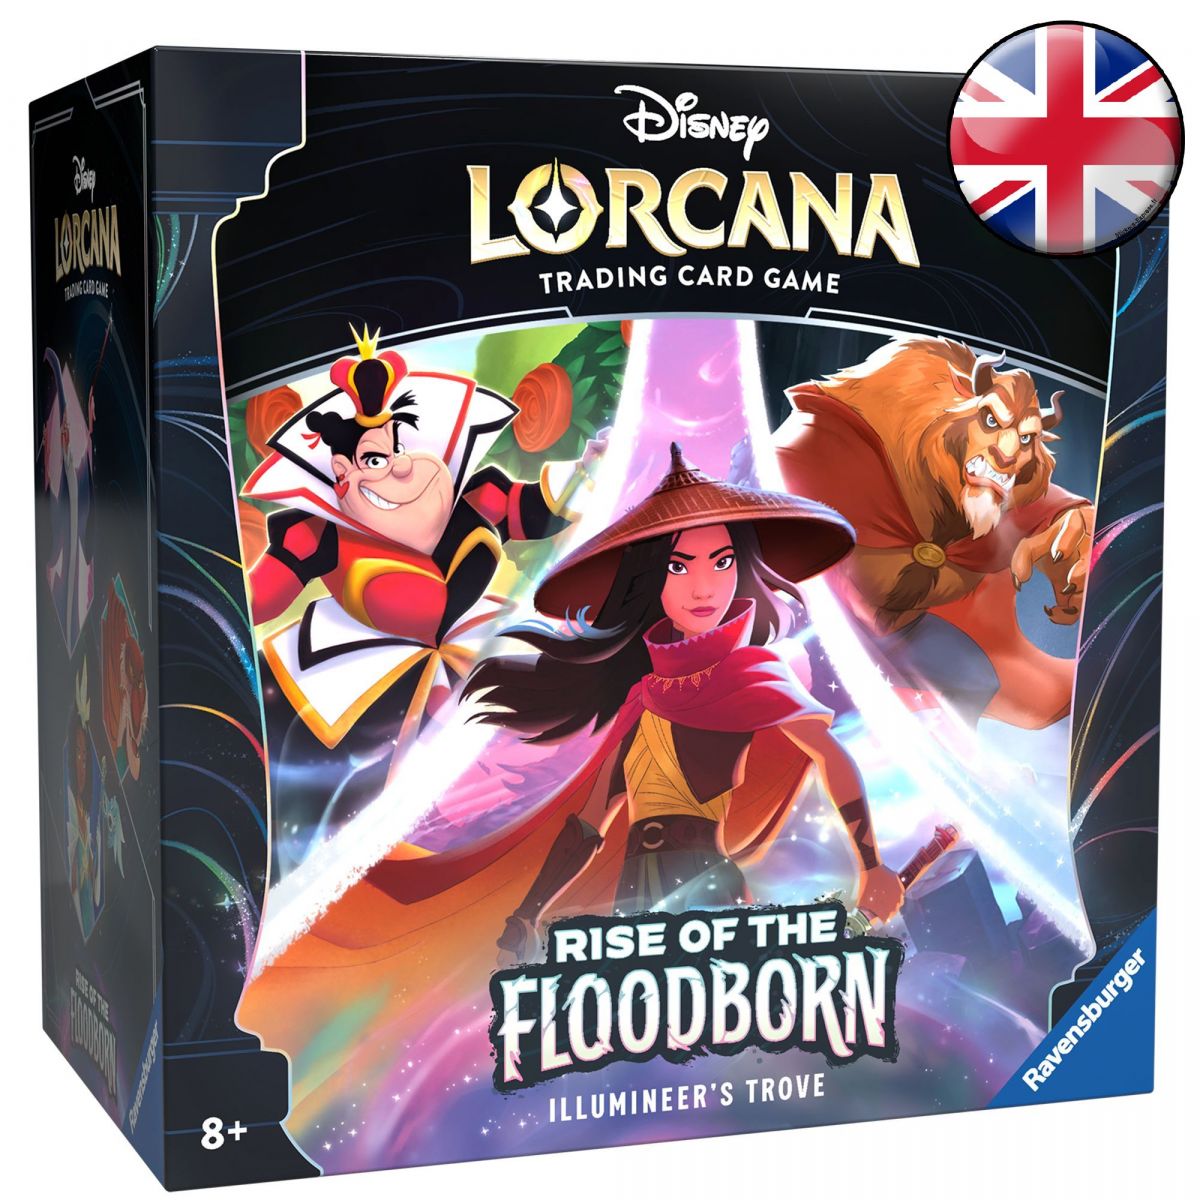 Item Disney Lorcana - Illuminers Trove Pack - Coffret au Trésor de L'illumineur - Chapitre 2 - L'ascension des Floodborn - EN